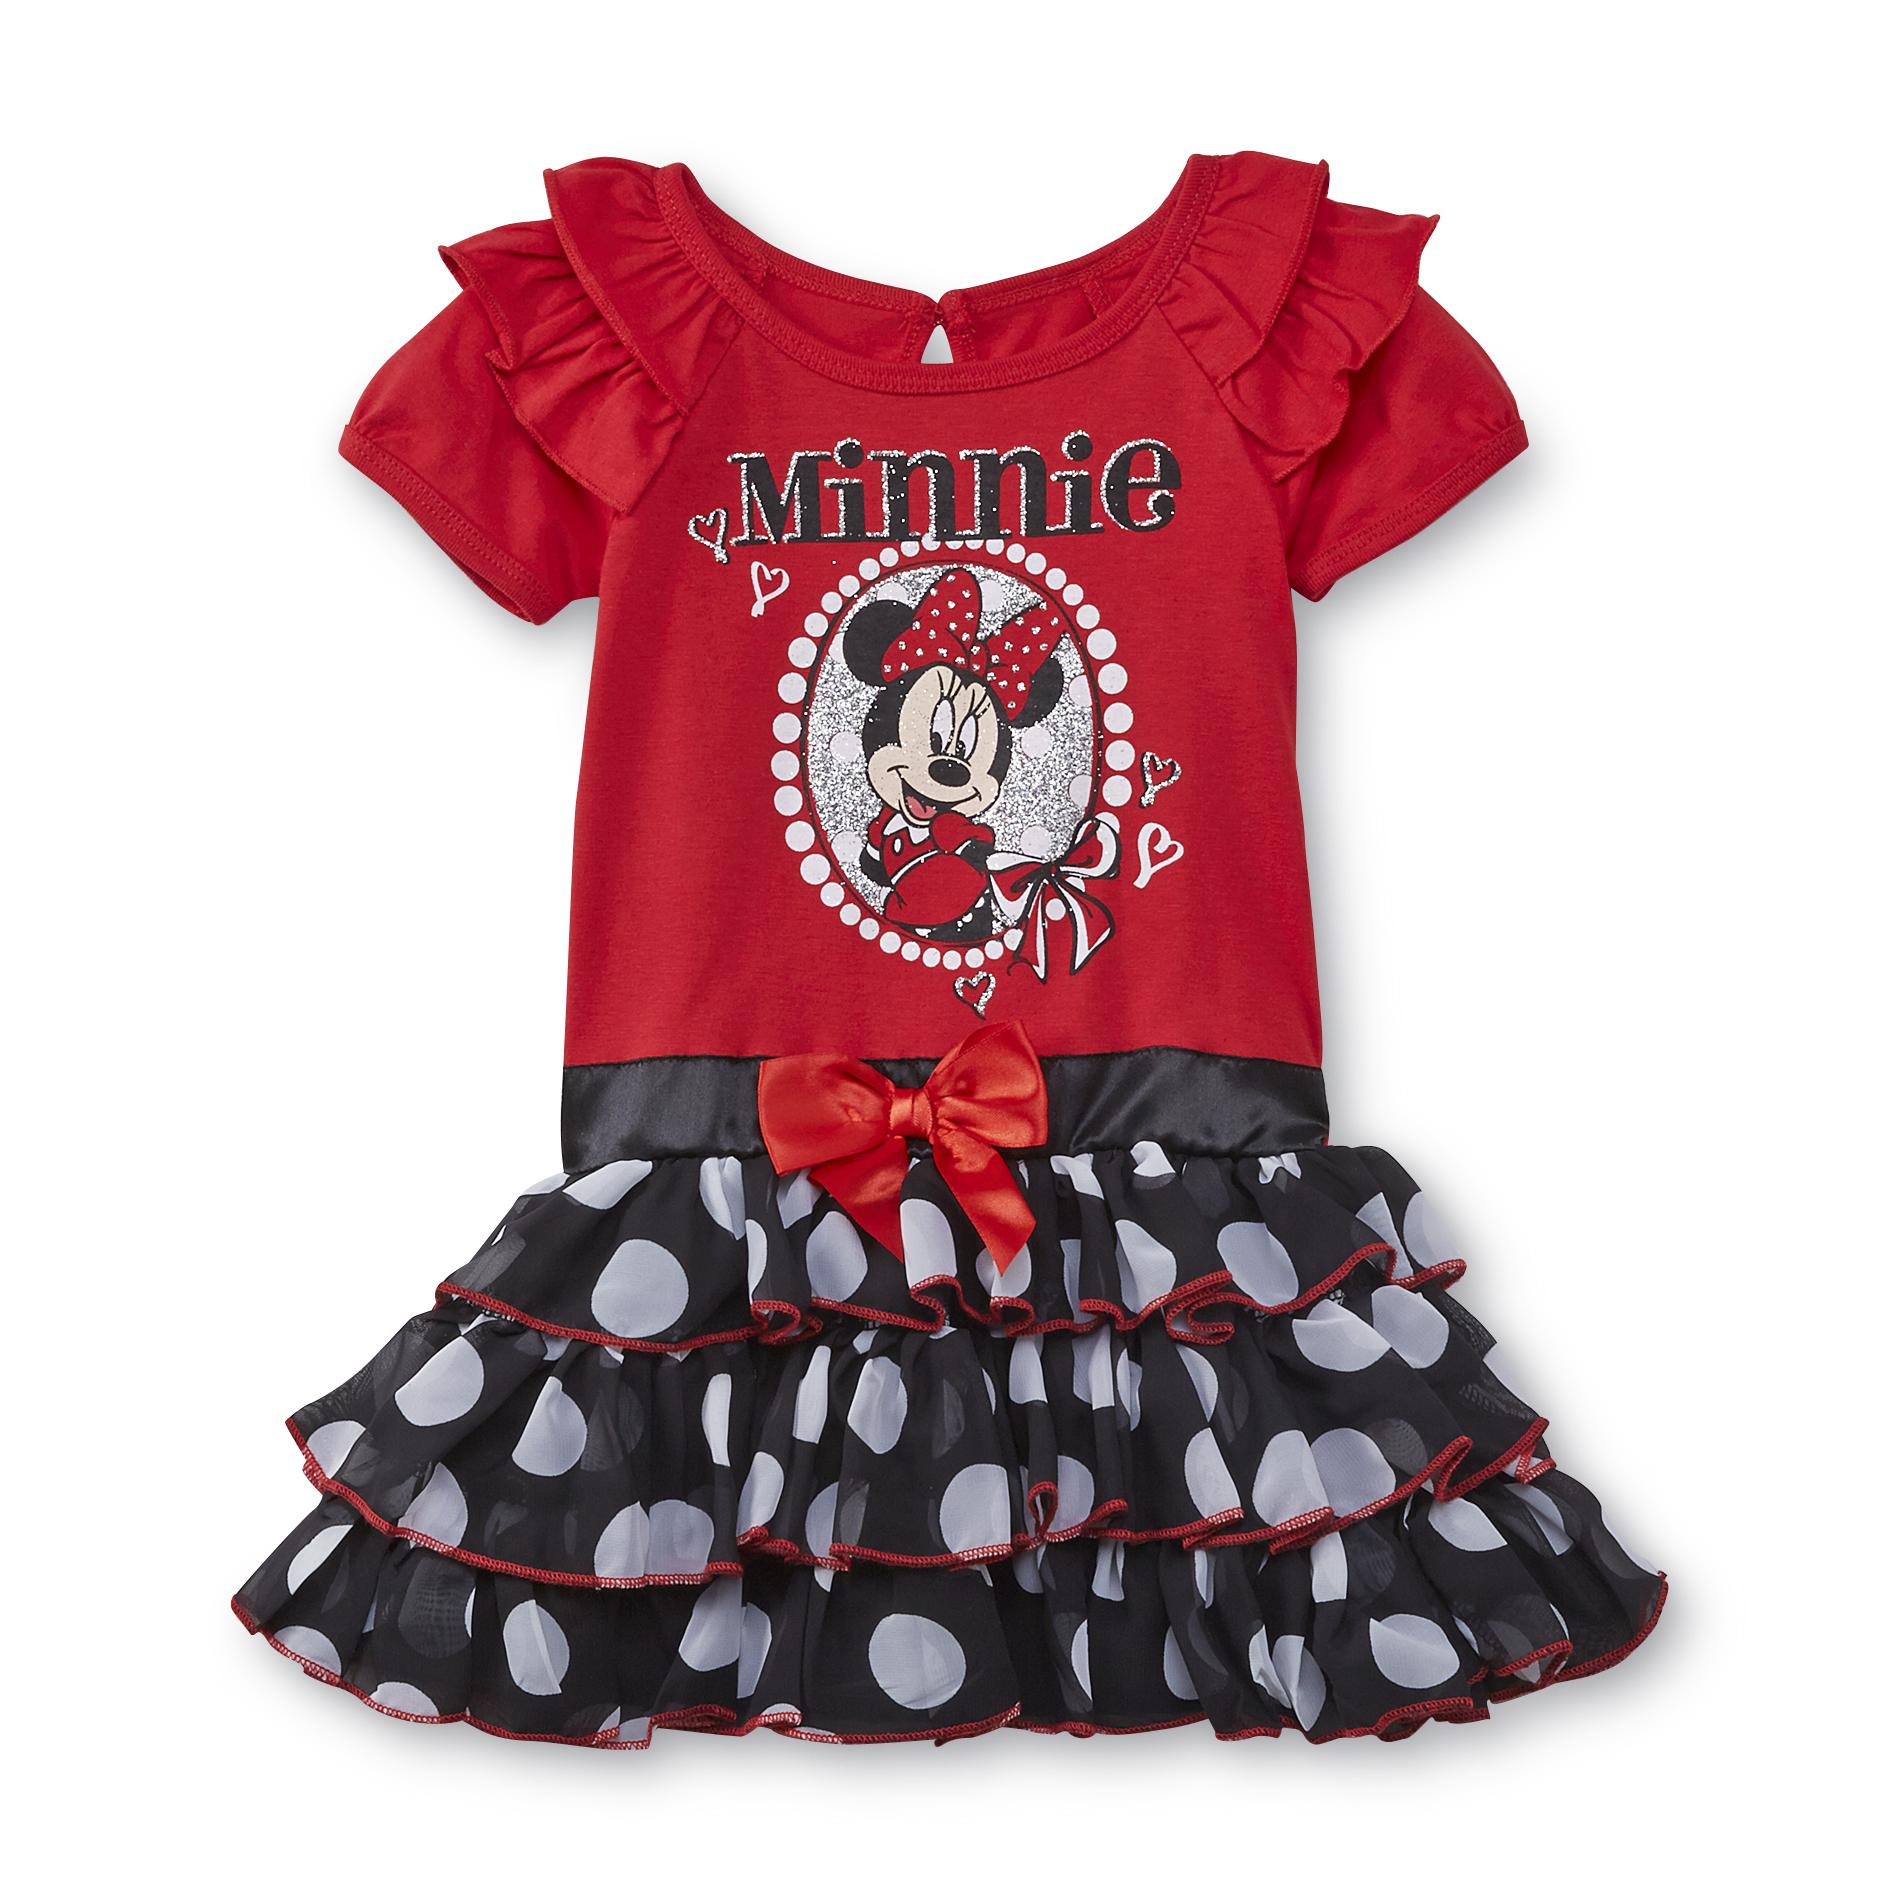 Disney Minnie Mouse Infant & Toddler Girl's Dress - Polka Dot